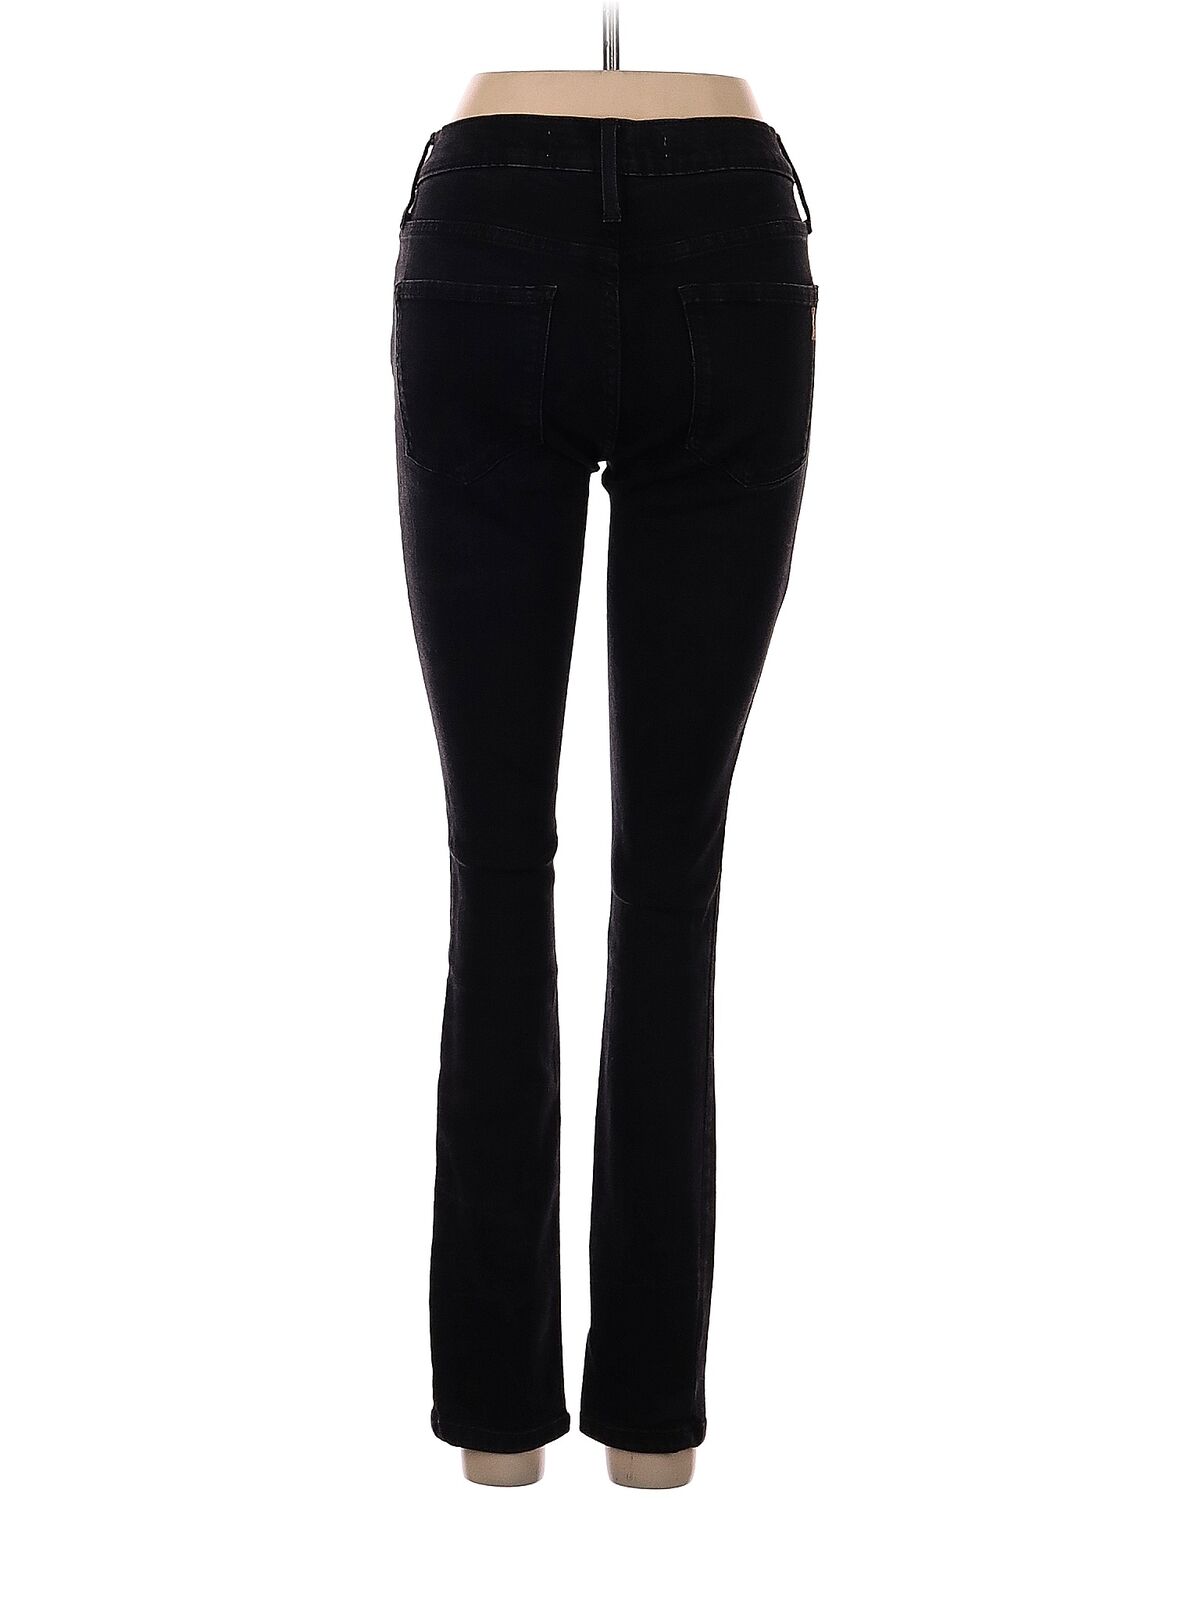 Vintage X America Women Black Jeans 27W - image 2